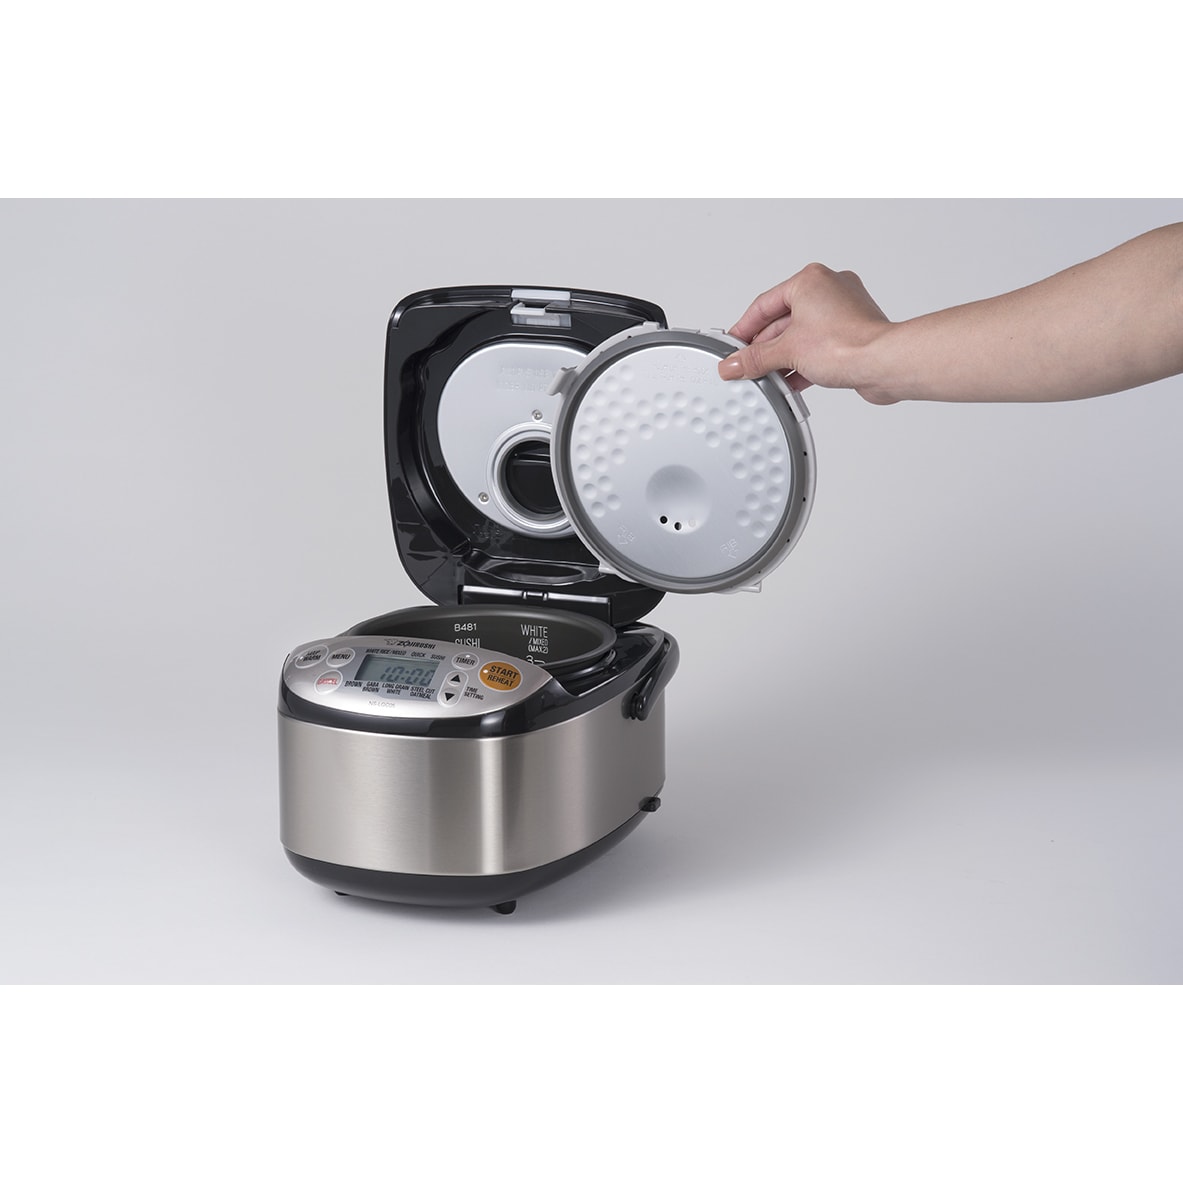 https://ak1.ostkcdn.com/images/products/13261130/Zojirushi-Micom-rice-cooker-Warmer-3-cup-d36effe0-5608-4d2d-a557-ebd5c9011556.jpg